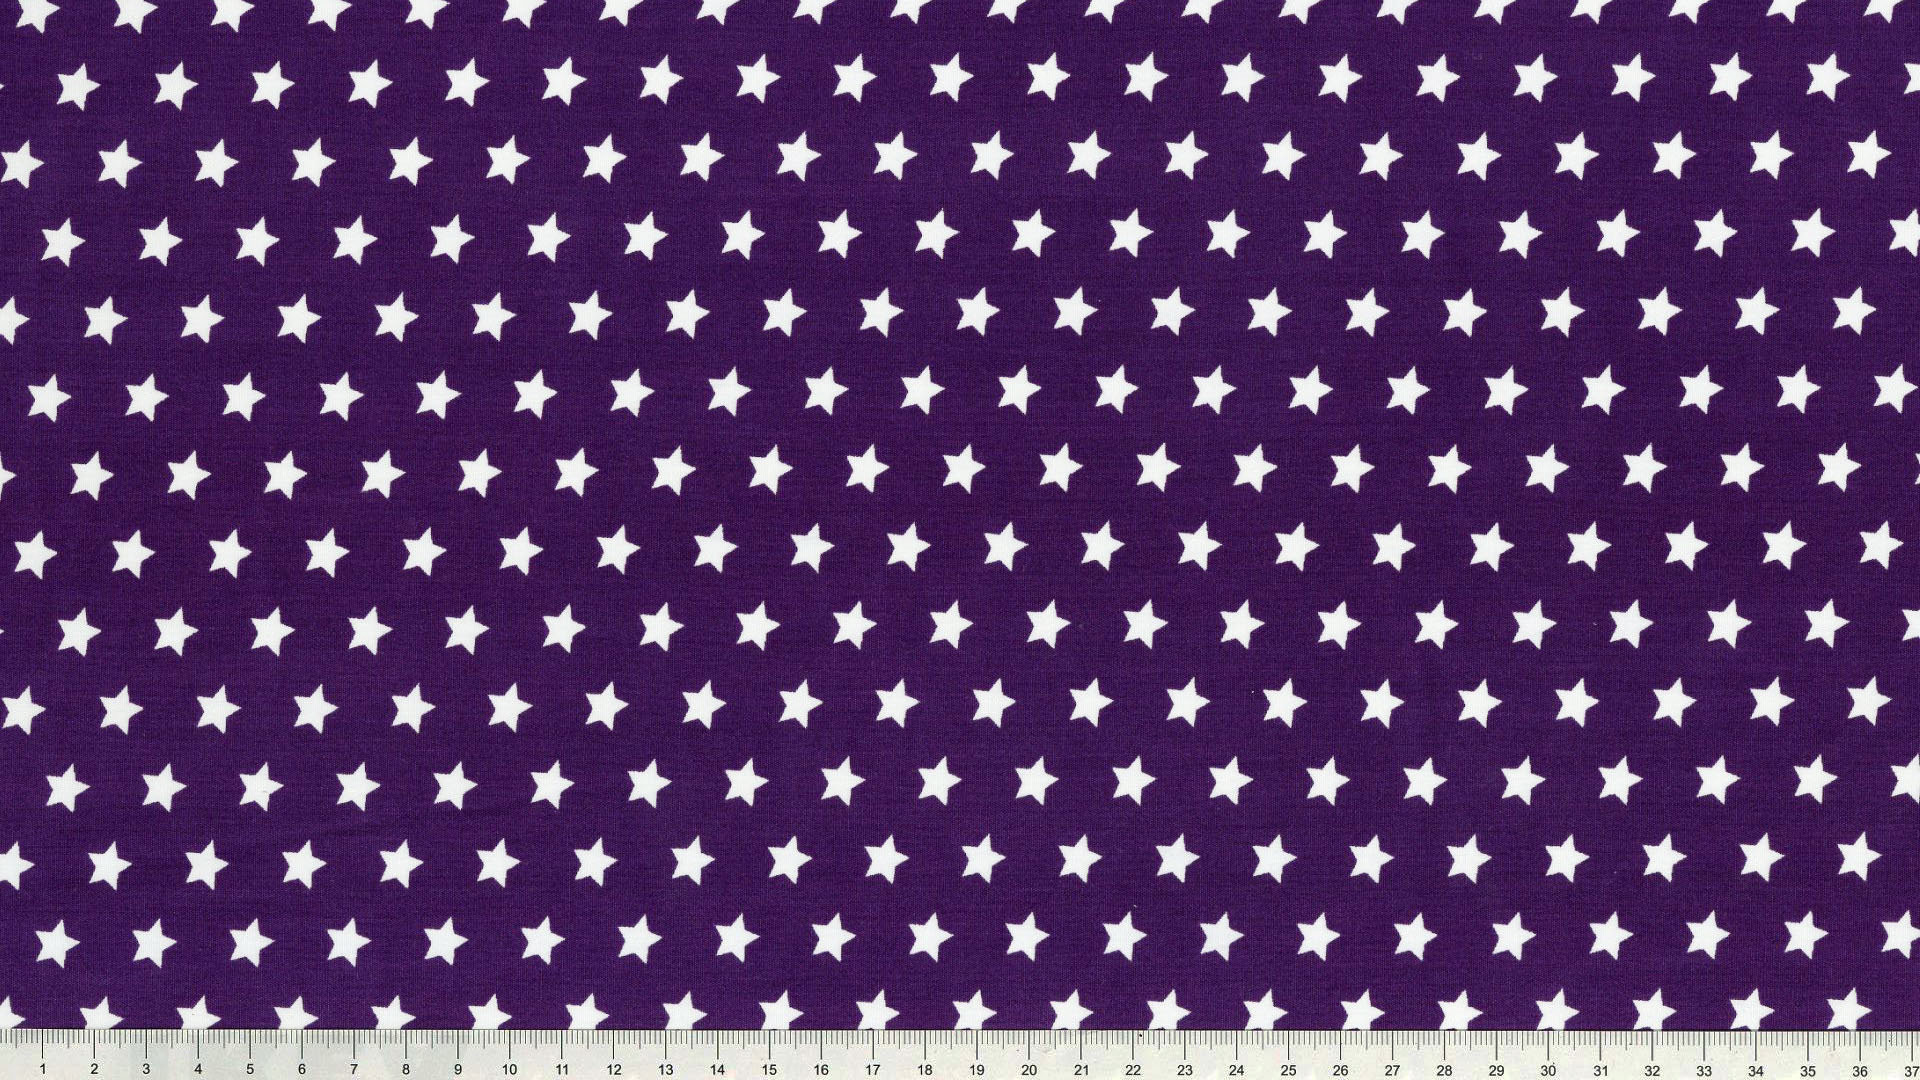 1920x1080 WHITE STARS ON PURPLE BACKGROUND